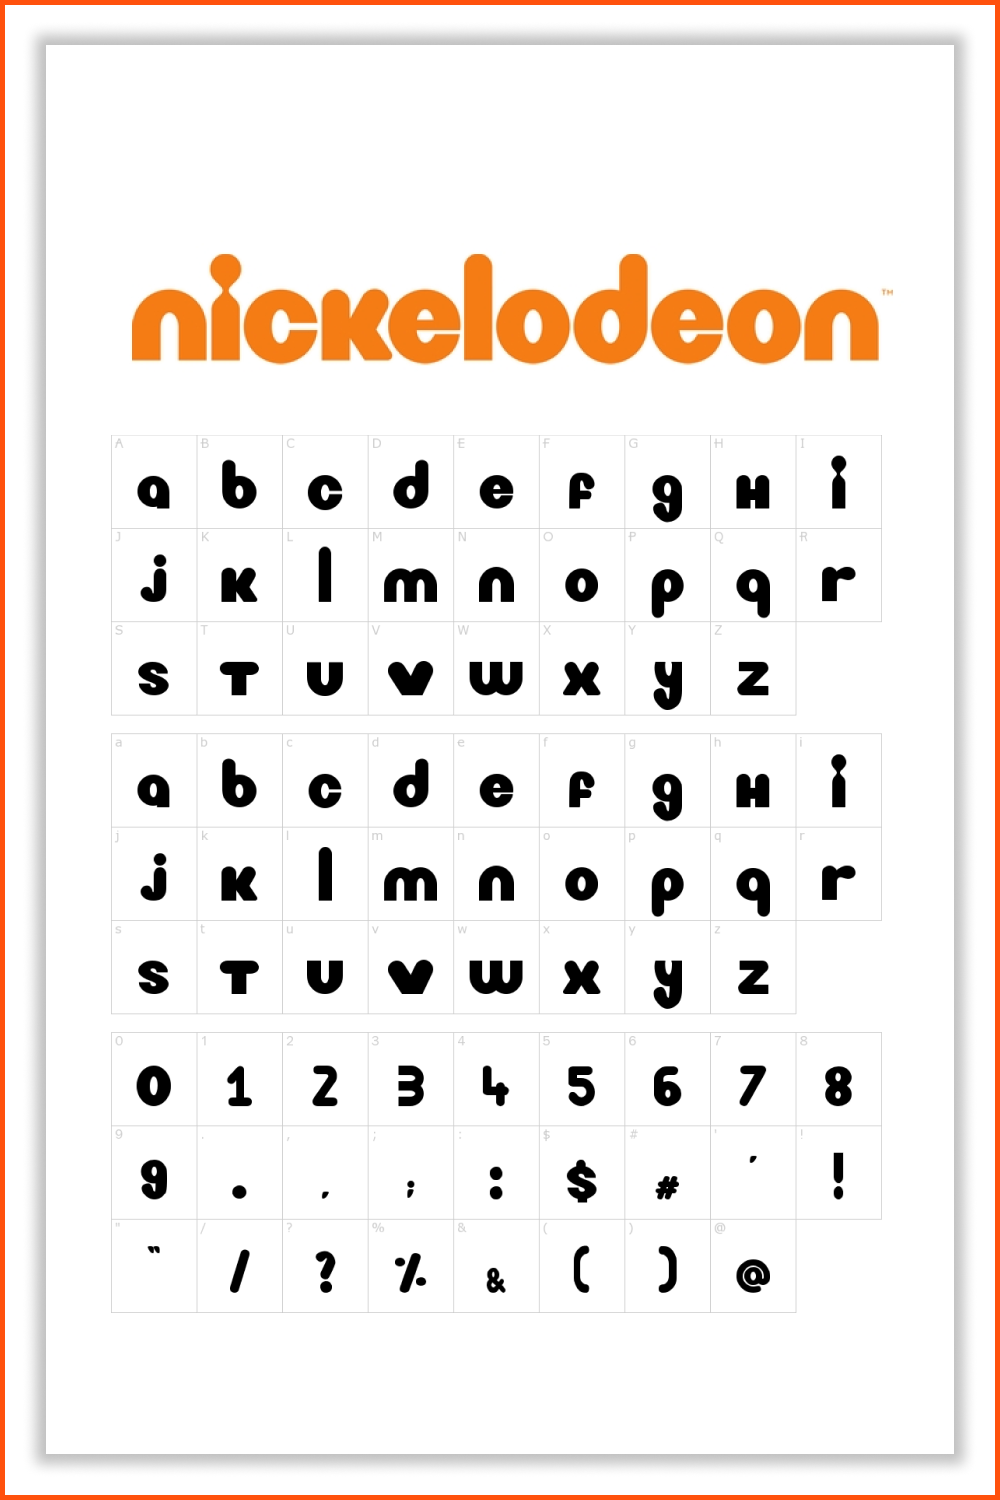 Nickelodeon Alphabet font on white background.